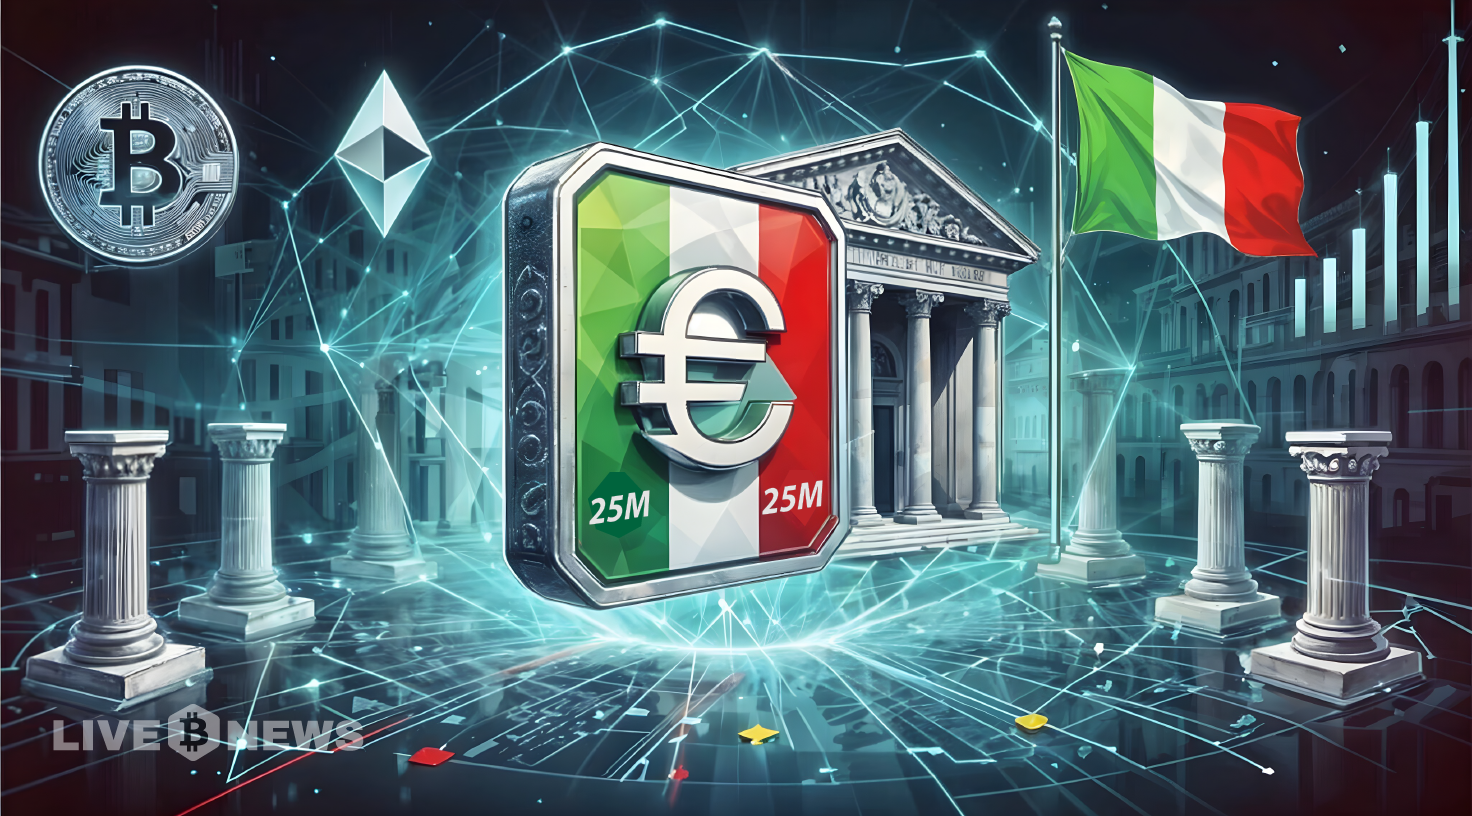 Italian Banks Conduct First Ever Blockchain-Based Bond Issuance Worth 25 Million Euros